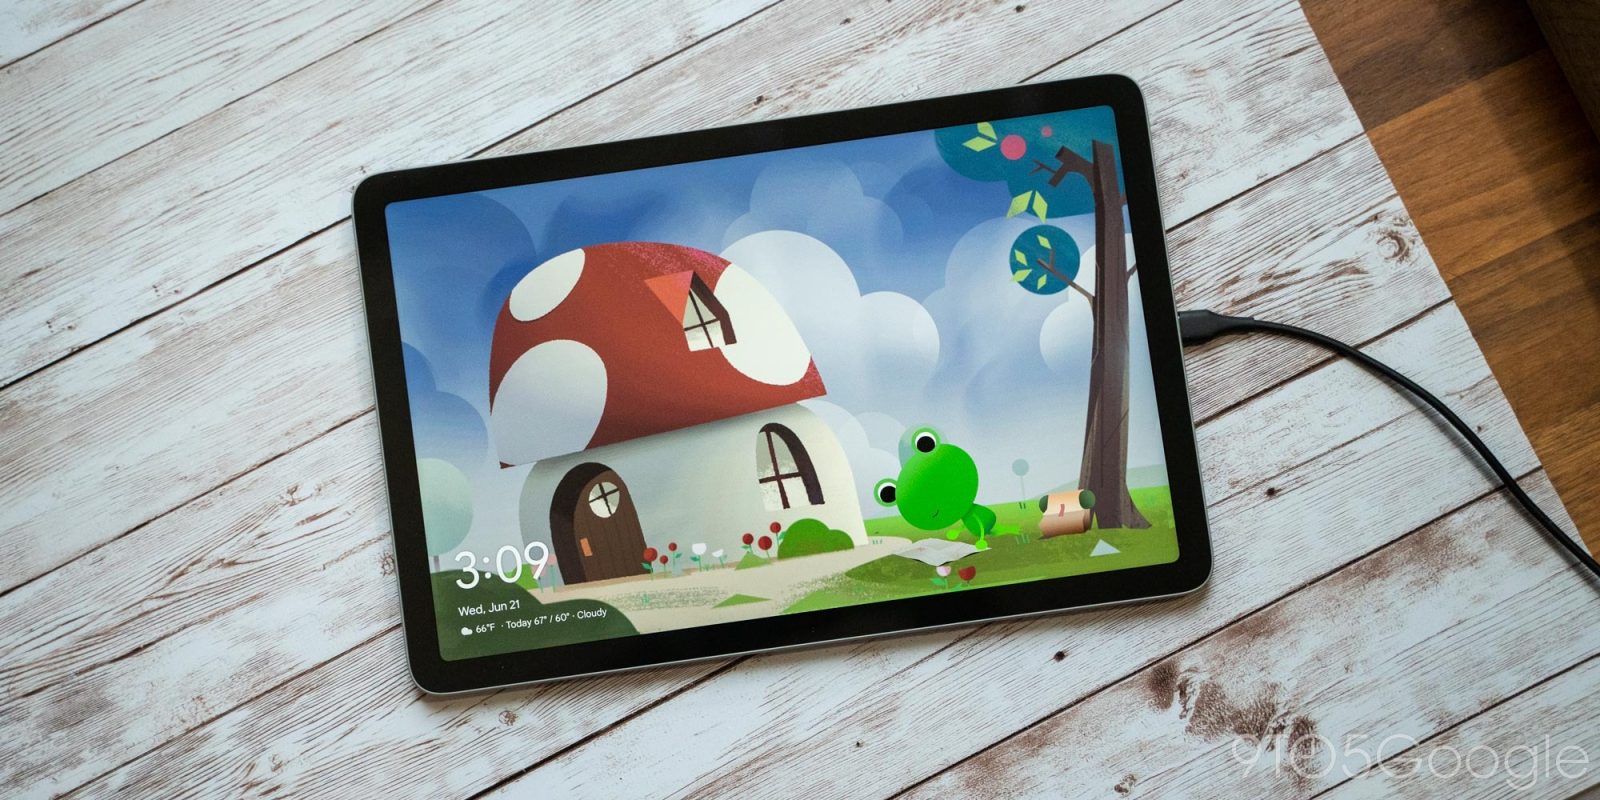 Google Pixel Tablet with Charging Speaker Dock 11 Android Tablet